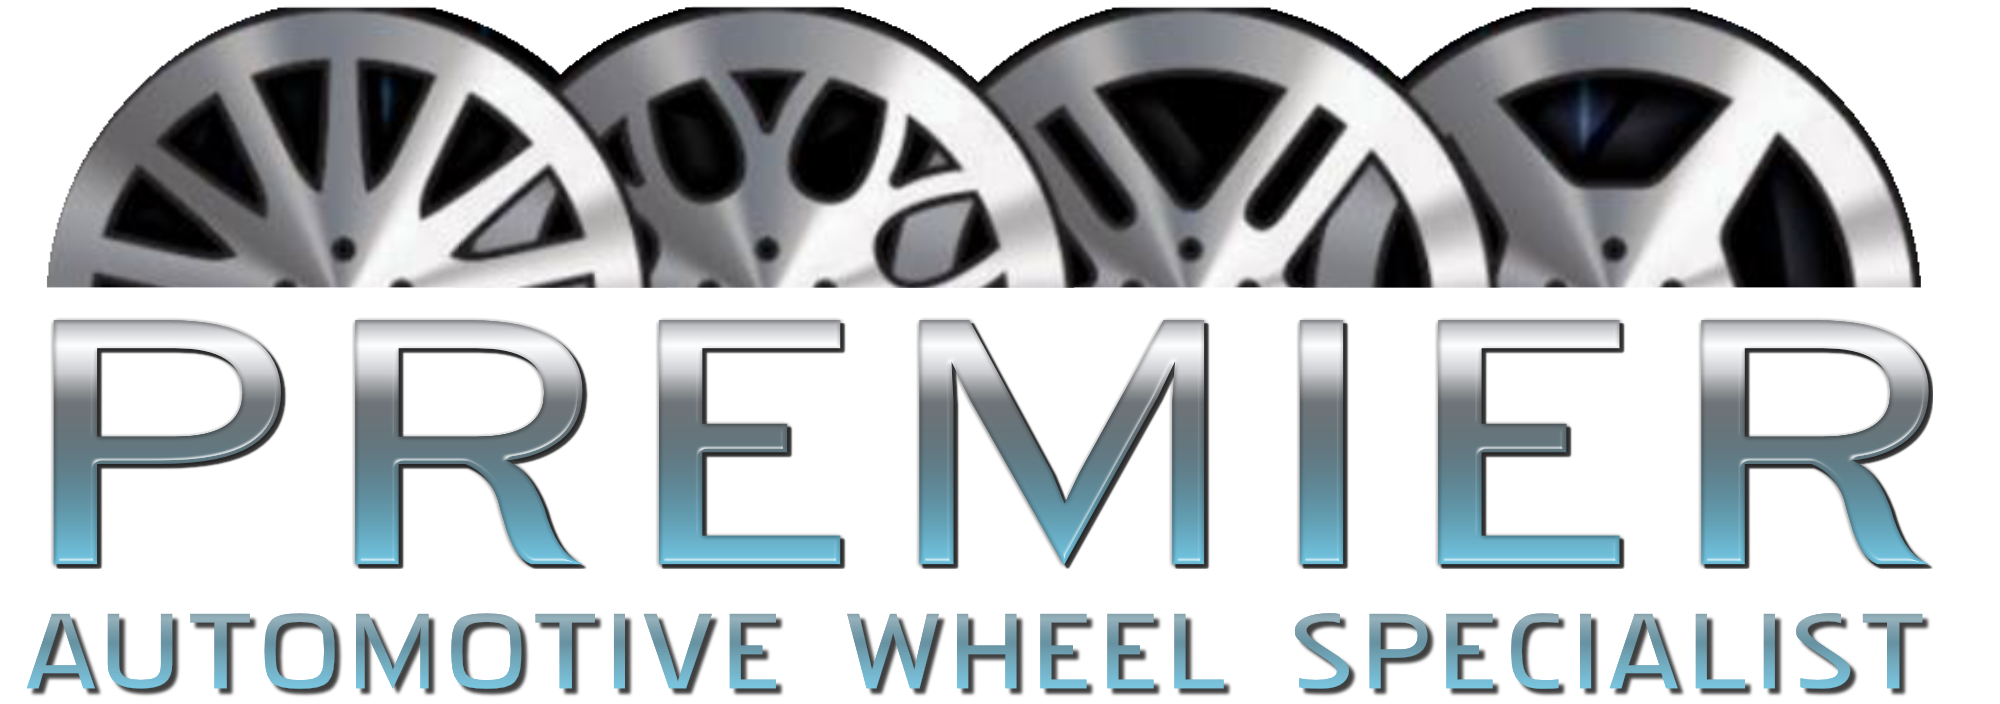 Premier Automotive Wheel Specialist Pasadena Rim Repair